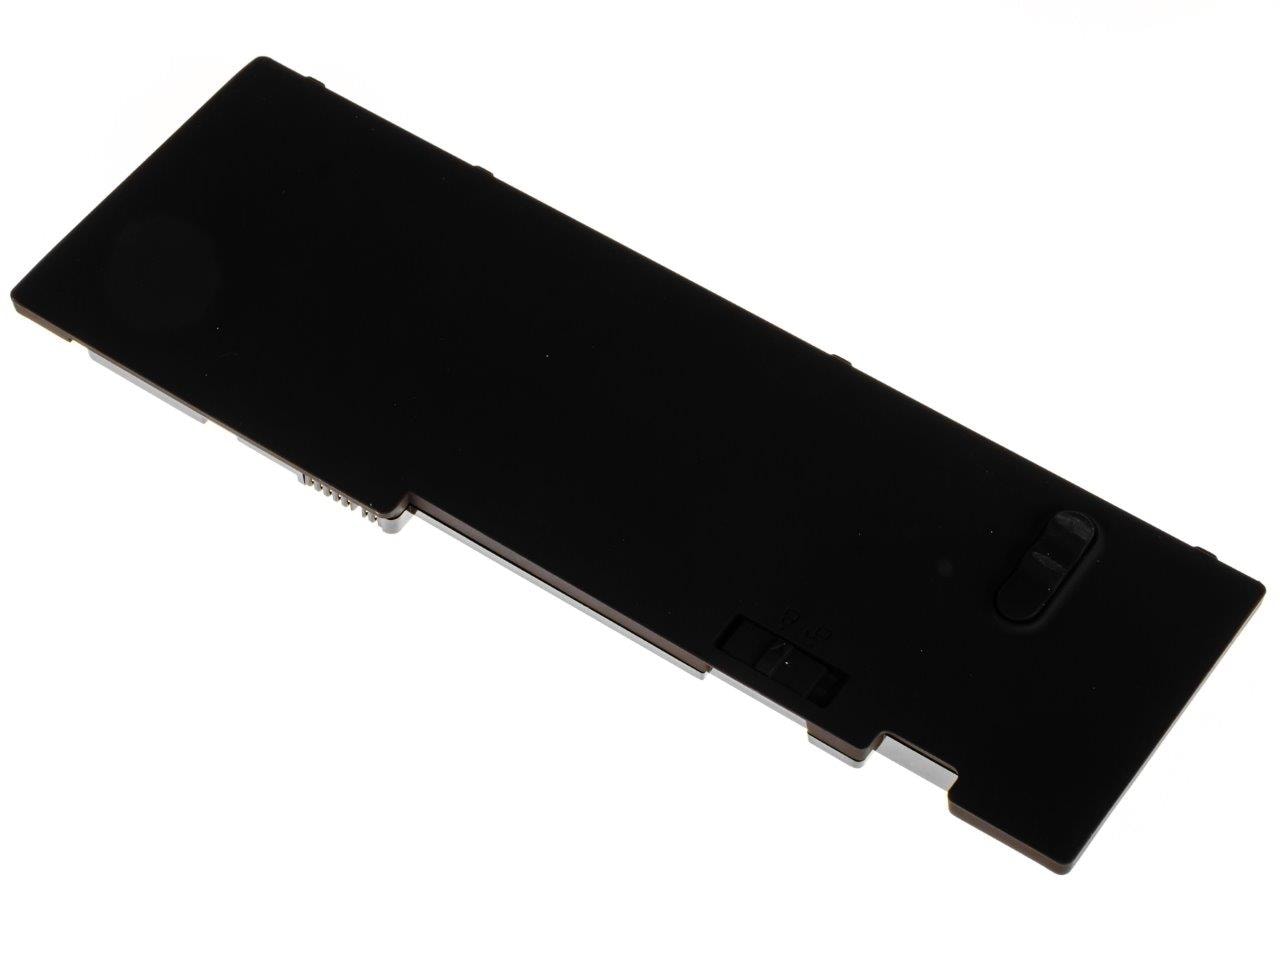 Laptop batteri till Lenovo ThinkPad T430s T430si / 11,1V 4400mAh